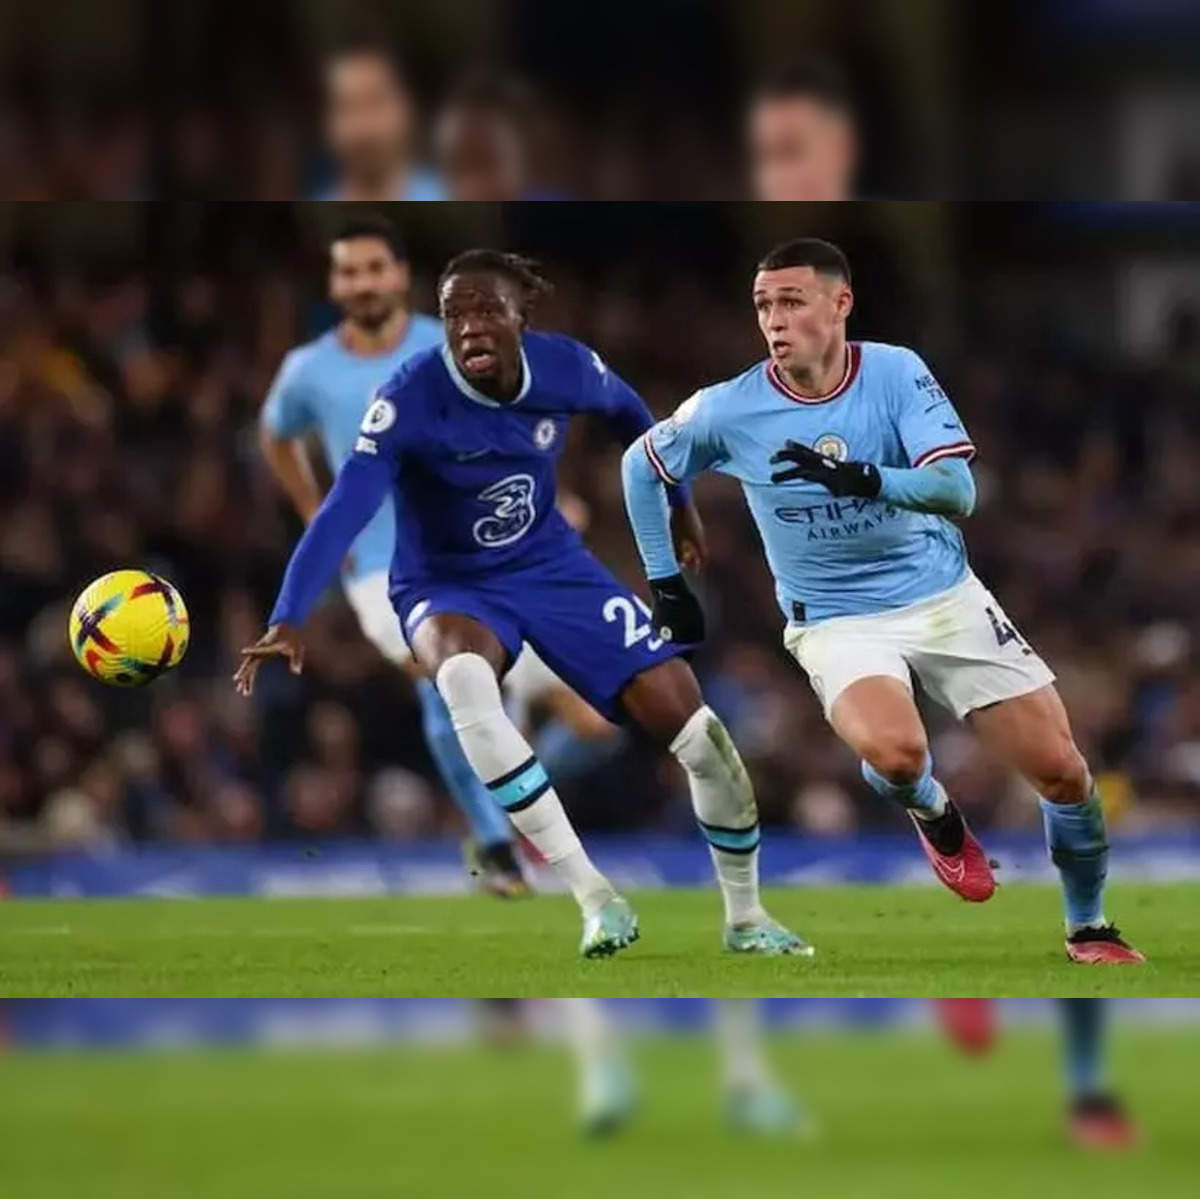 man city vs chelsea: Manchester City vs Chelsea live streaming